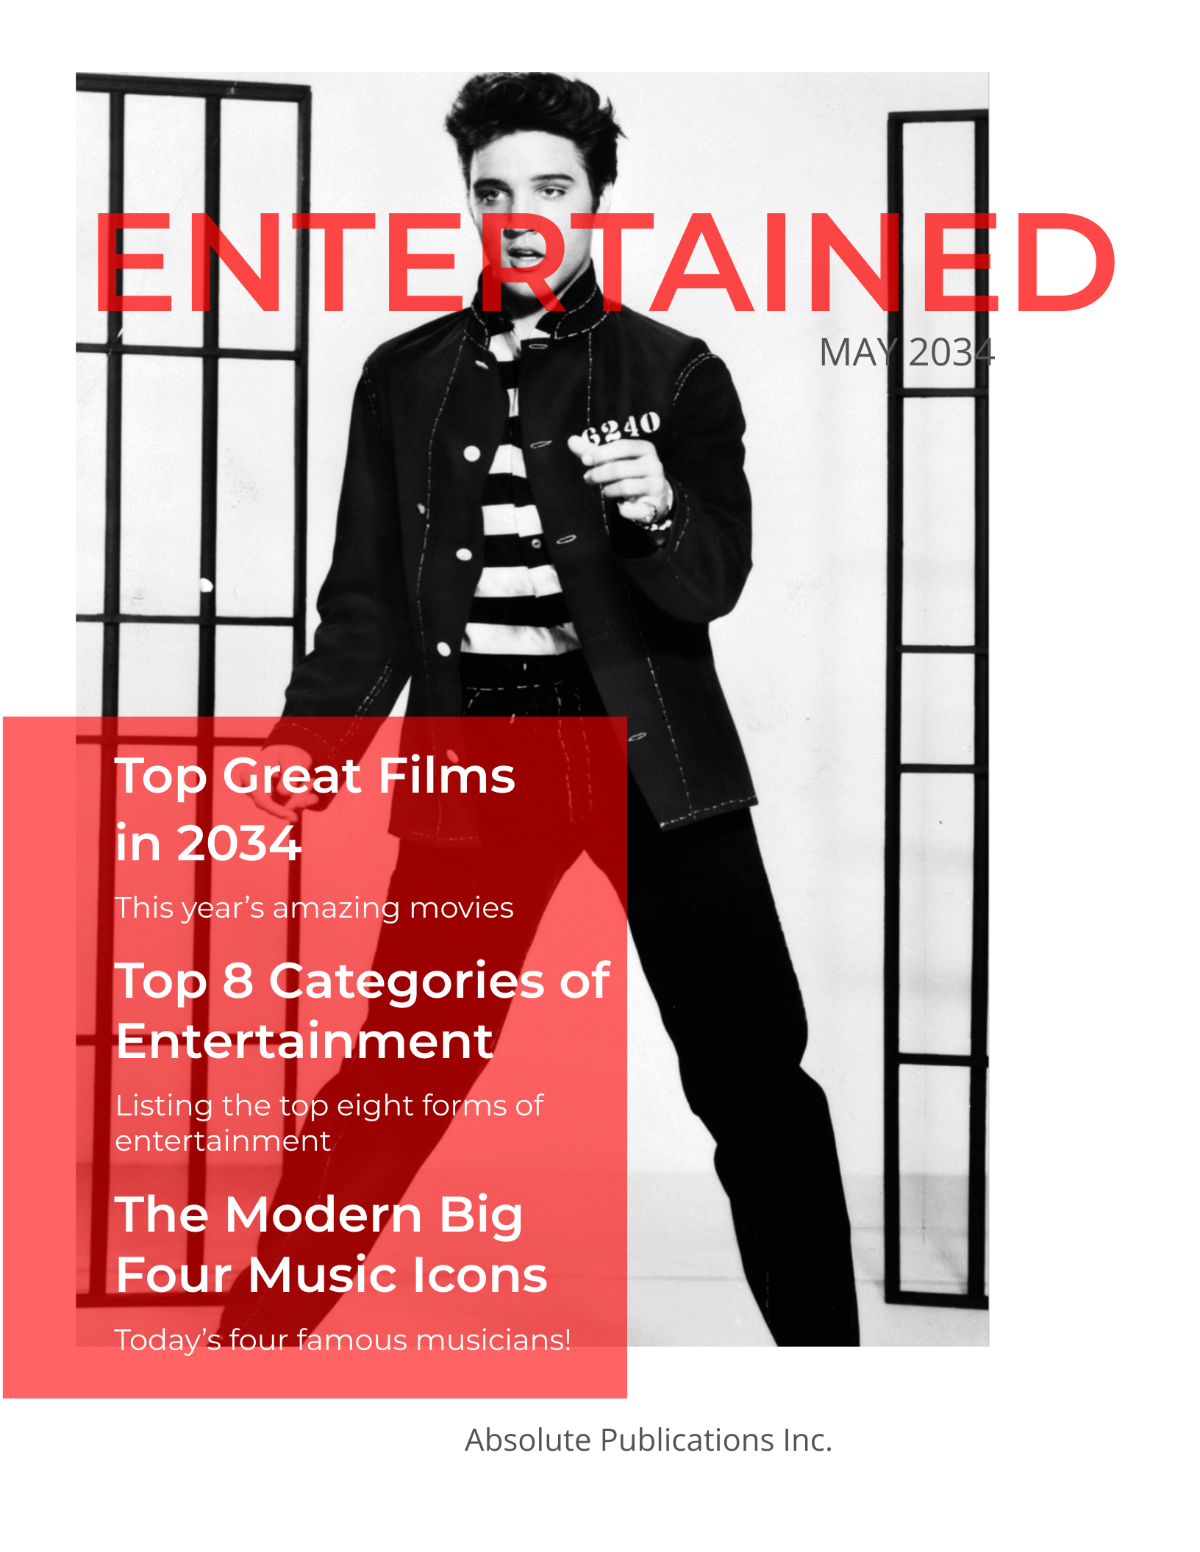 Printable Entertainment Magazine Template